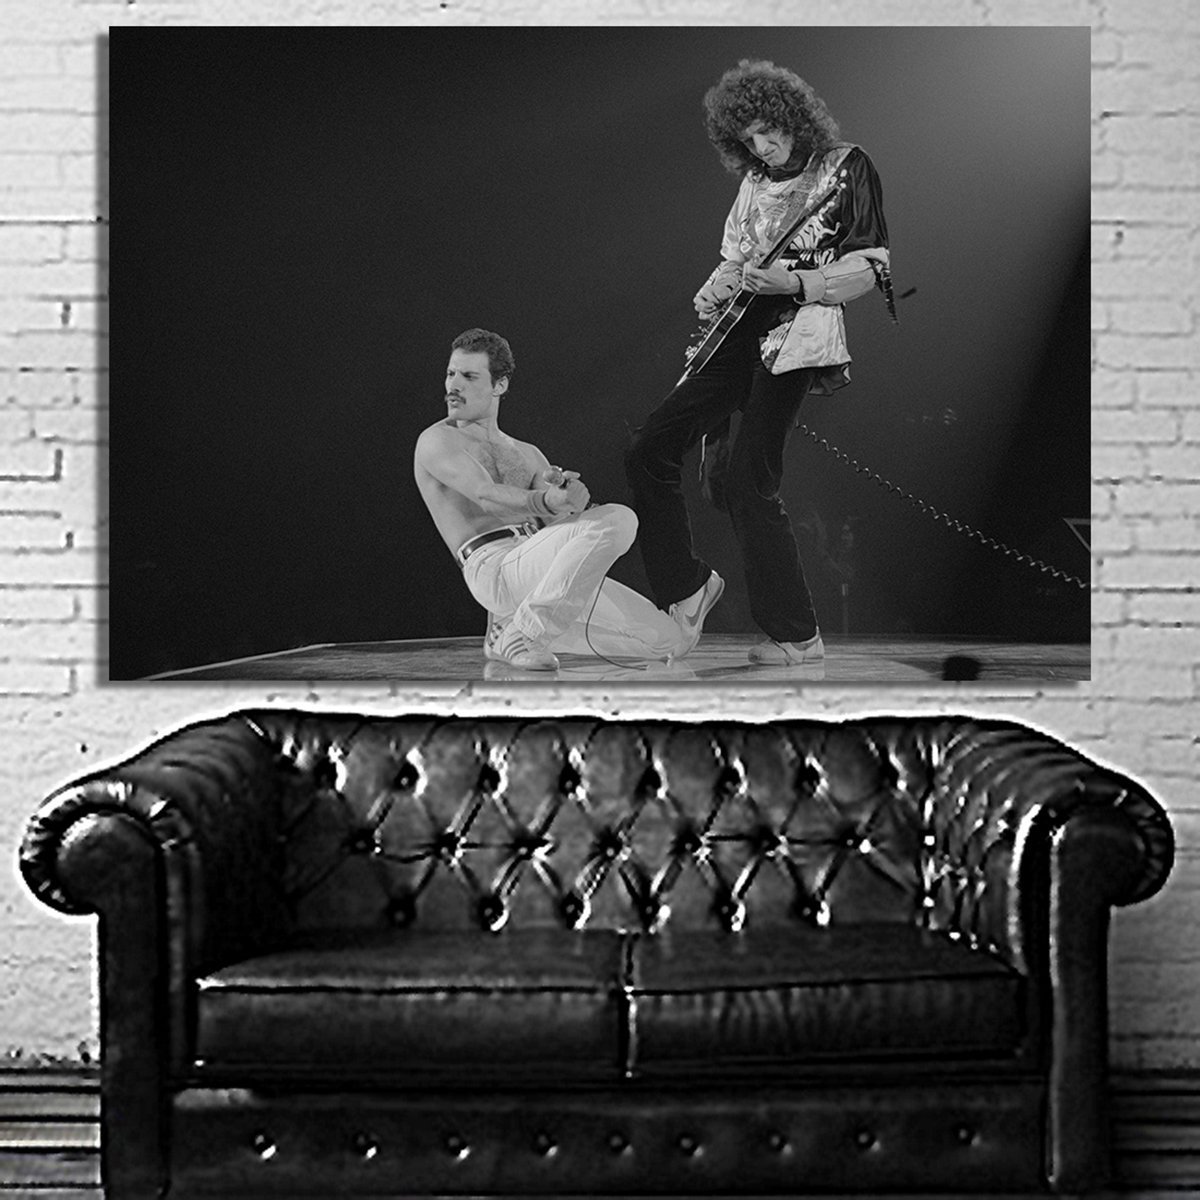 Queen クイーン 特大 ポスター 150x100cm 海外 ロック バンド アート インテリア グッズ 写真 雑貨 絵 フォト フレディ マーキュリー 13_画像2